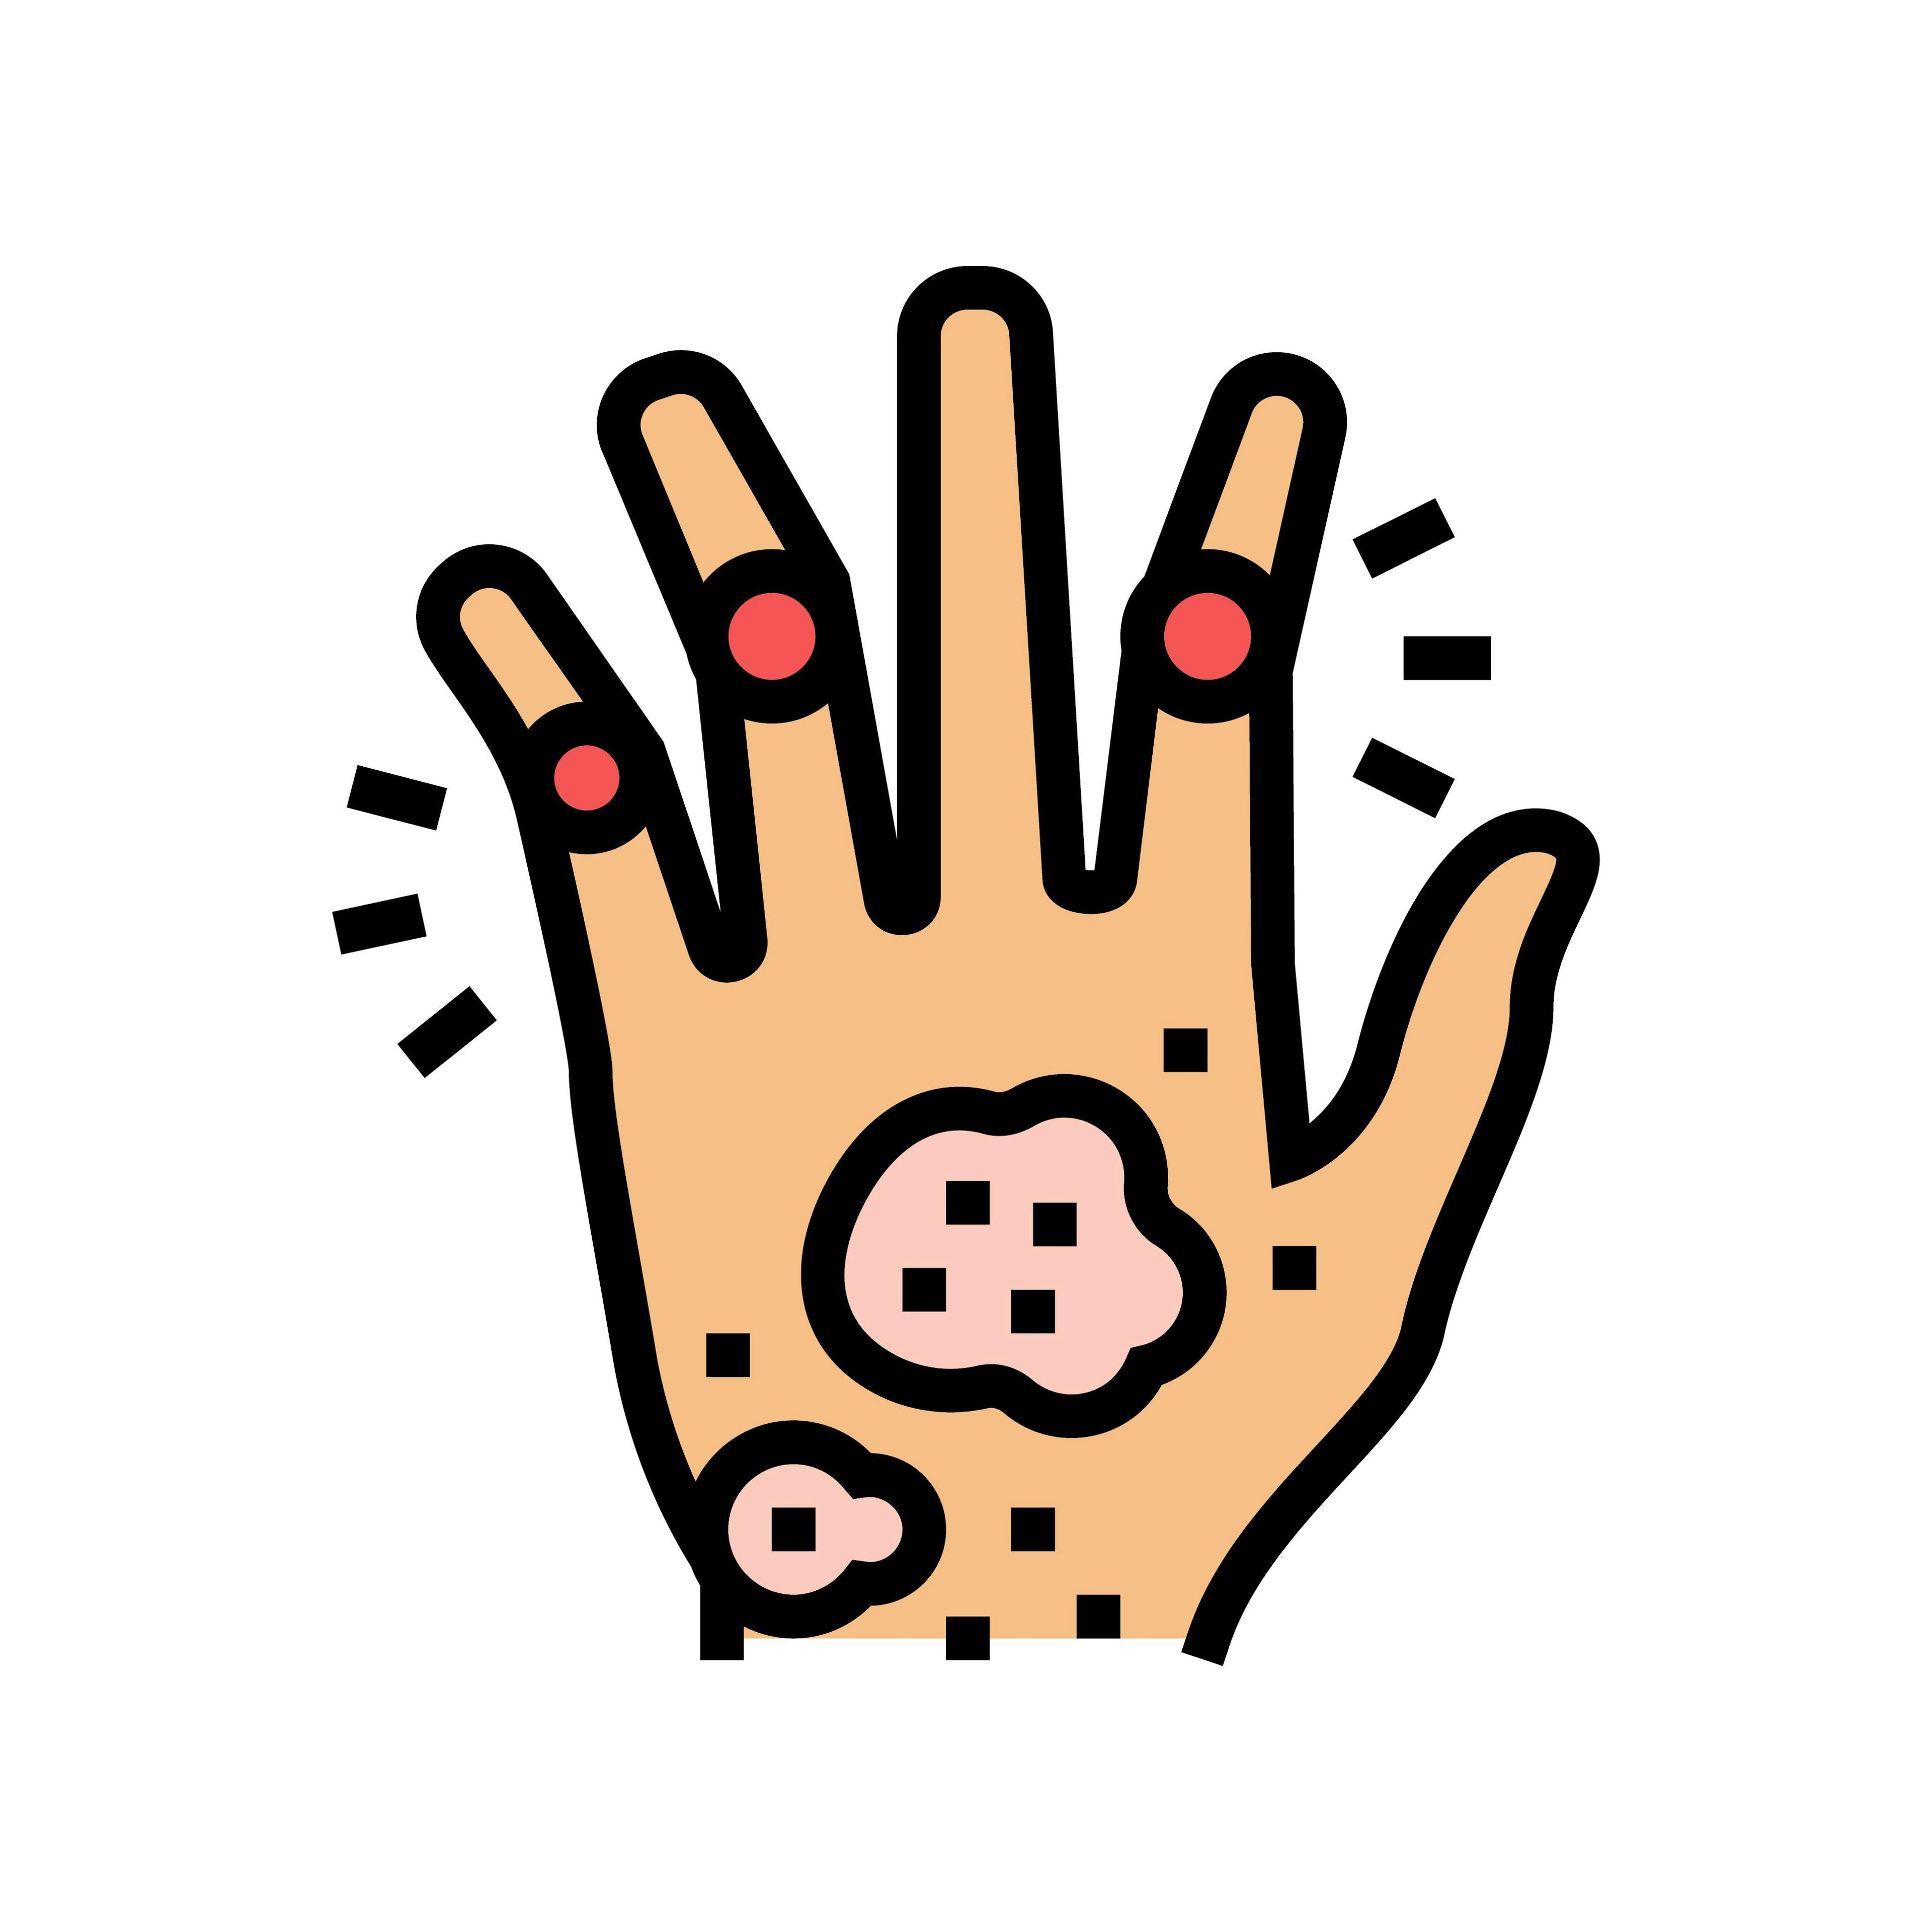 psoriatic arthritis hand illustration | vectorwin - stock.adobe.com